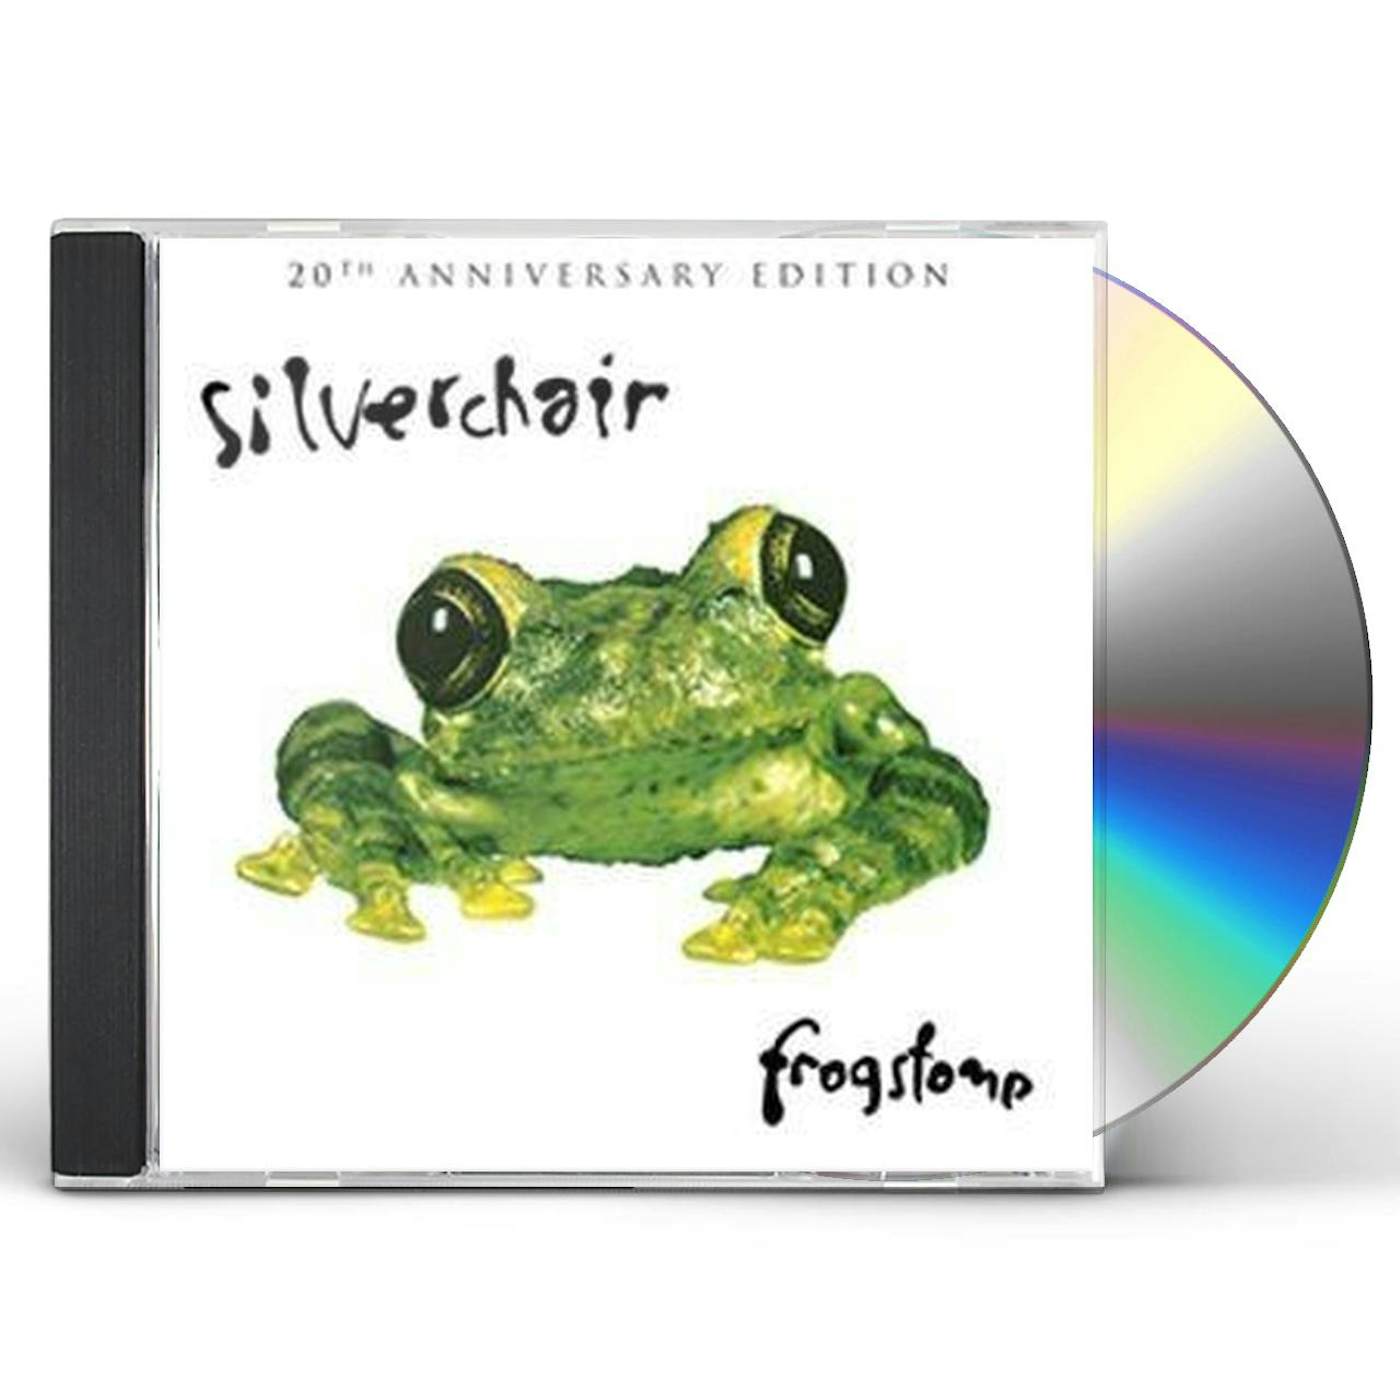 Silverchair FROGSTOMP (20TH ANNIVERSARY EDITION) CD